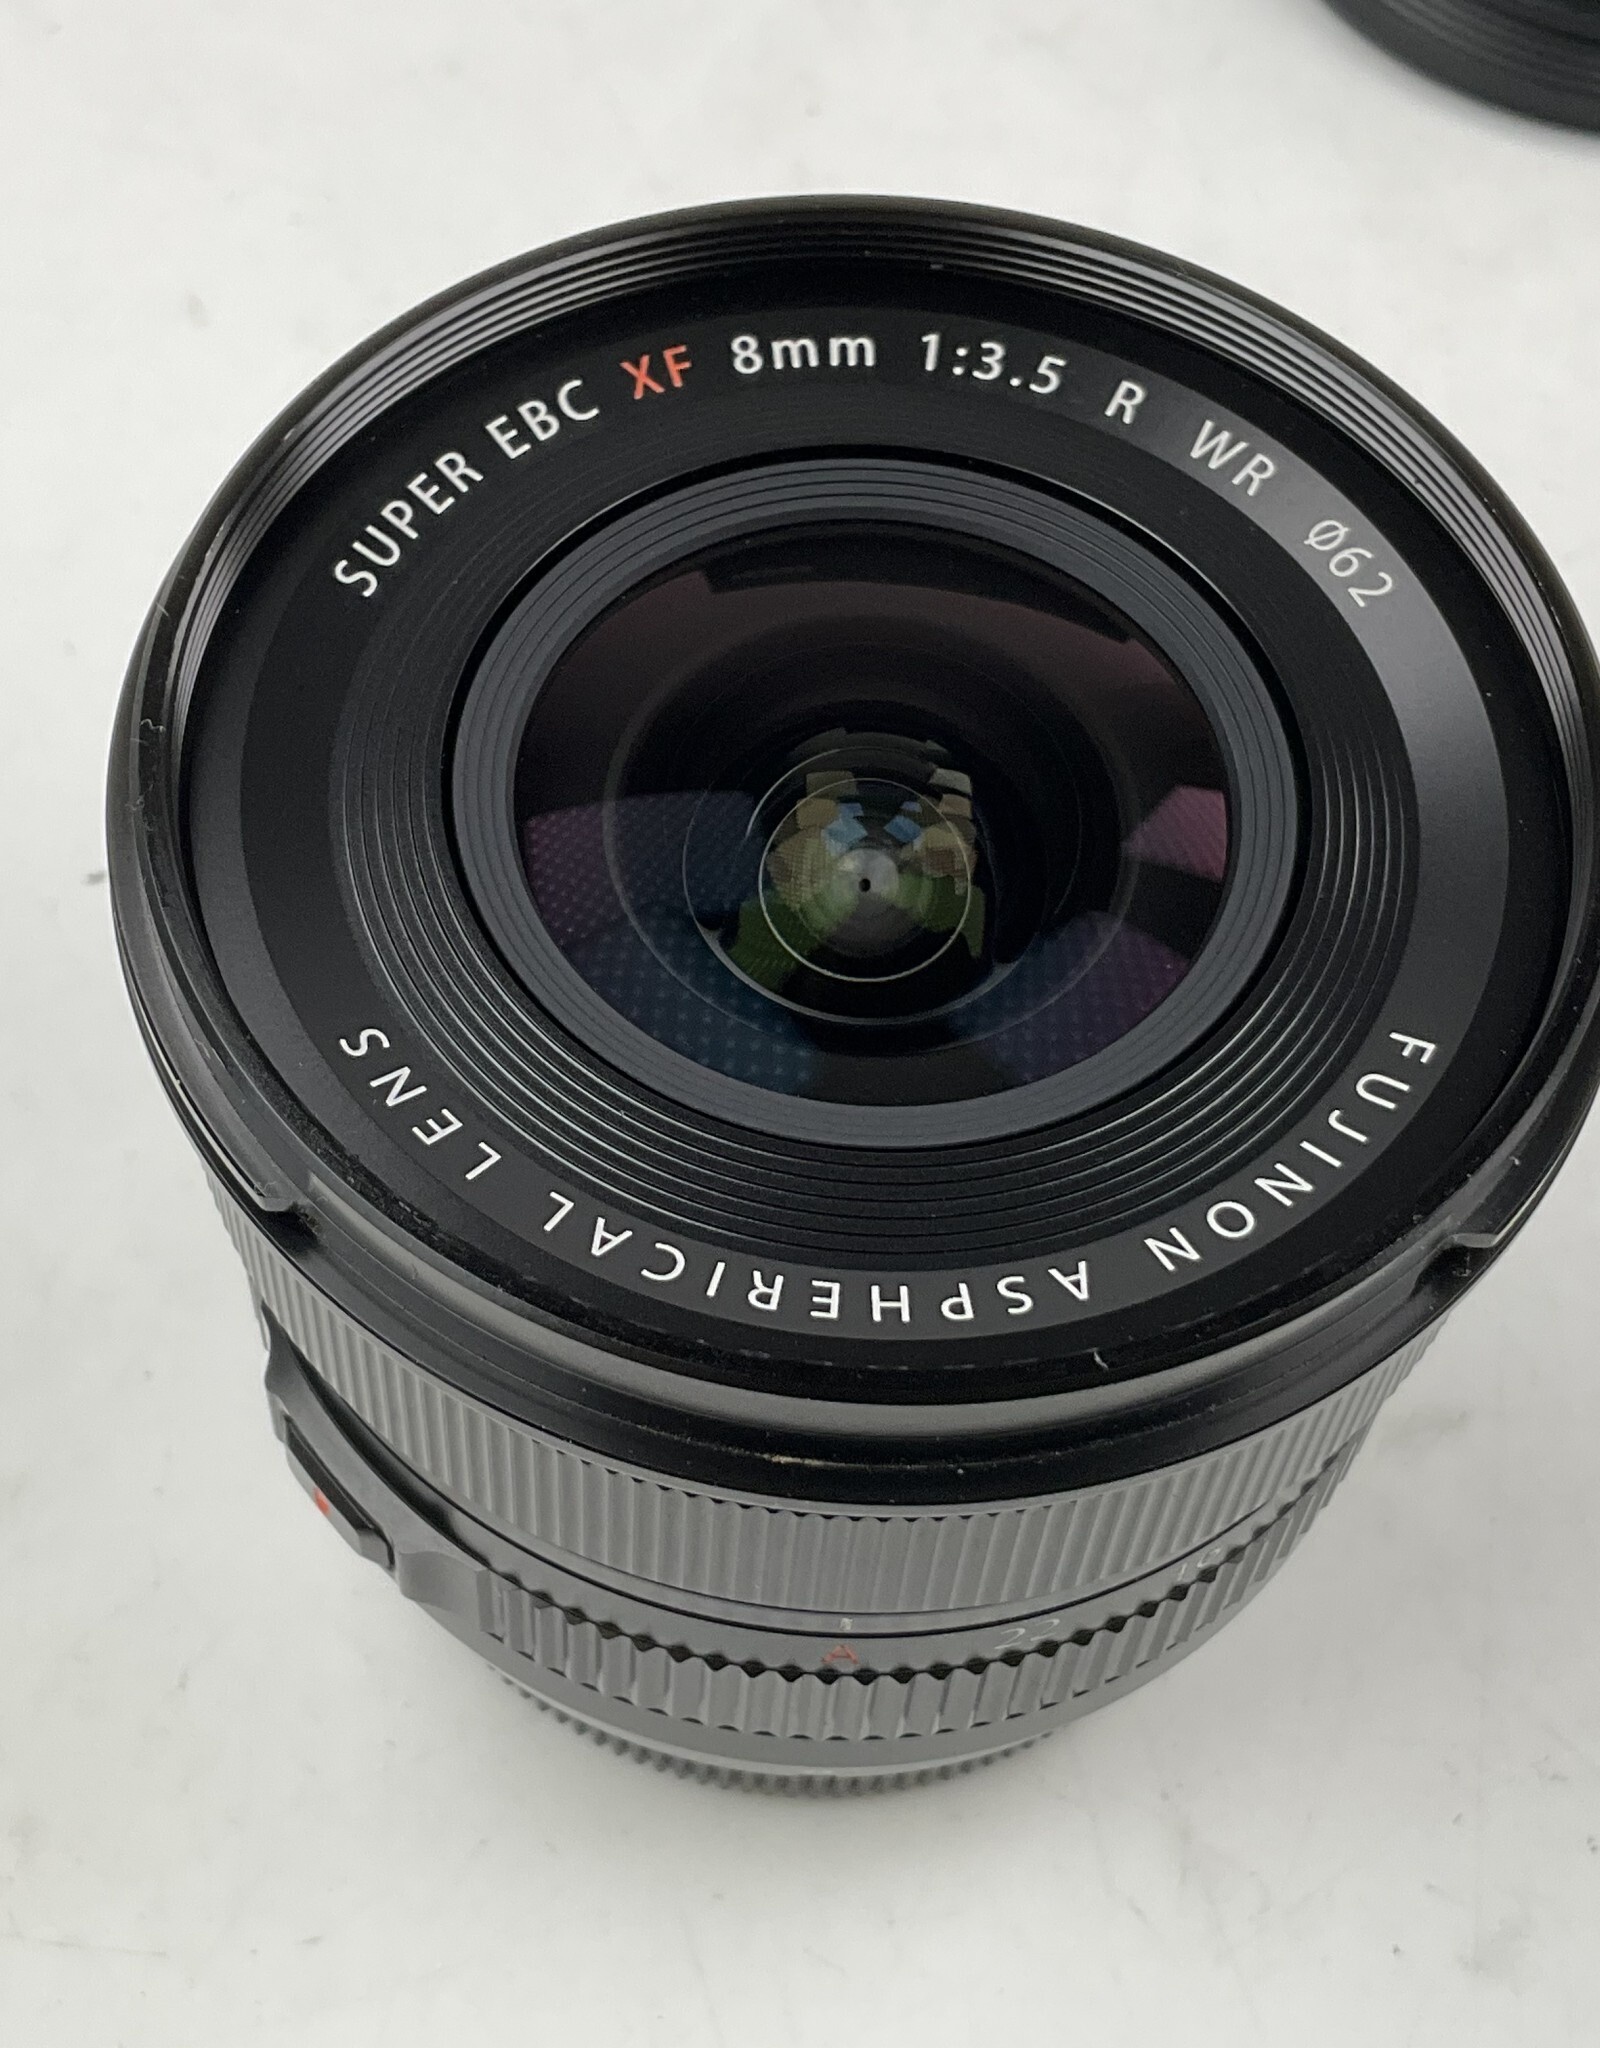 Fuji XF 8mm f3.5 R WR Lens in Box Used Good - Biggs Camera